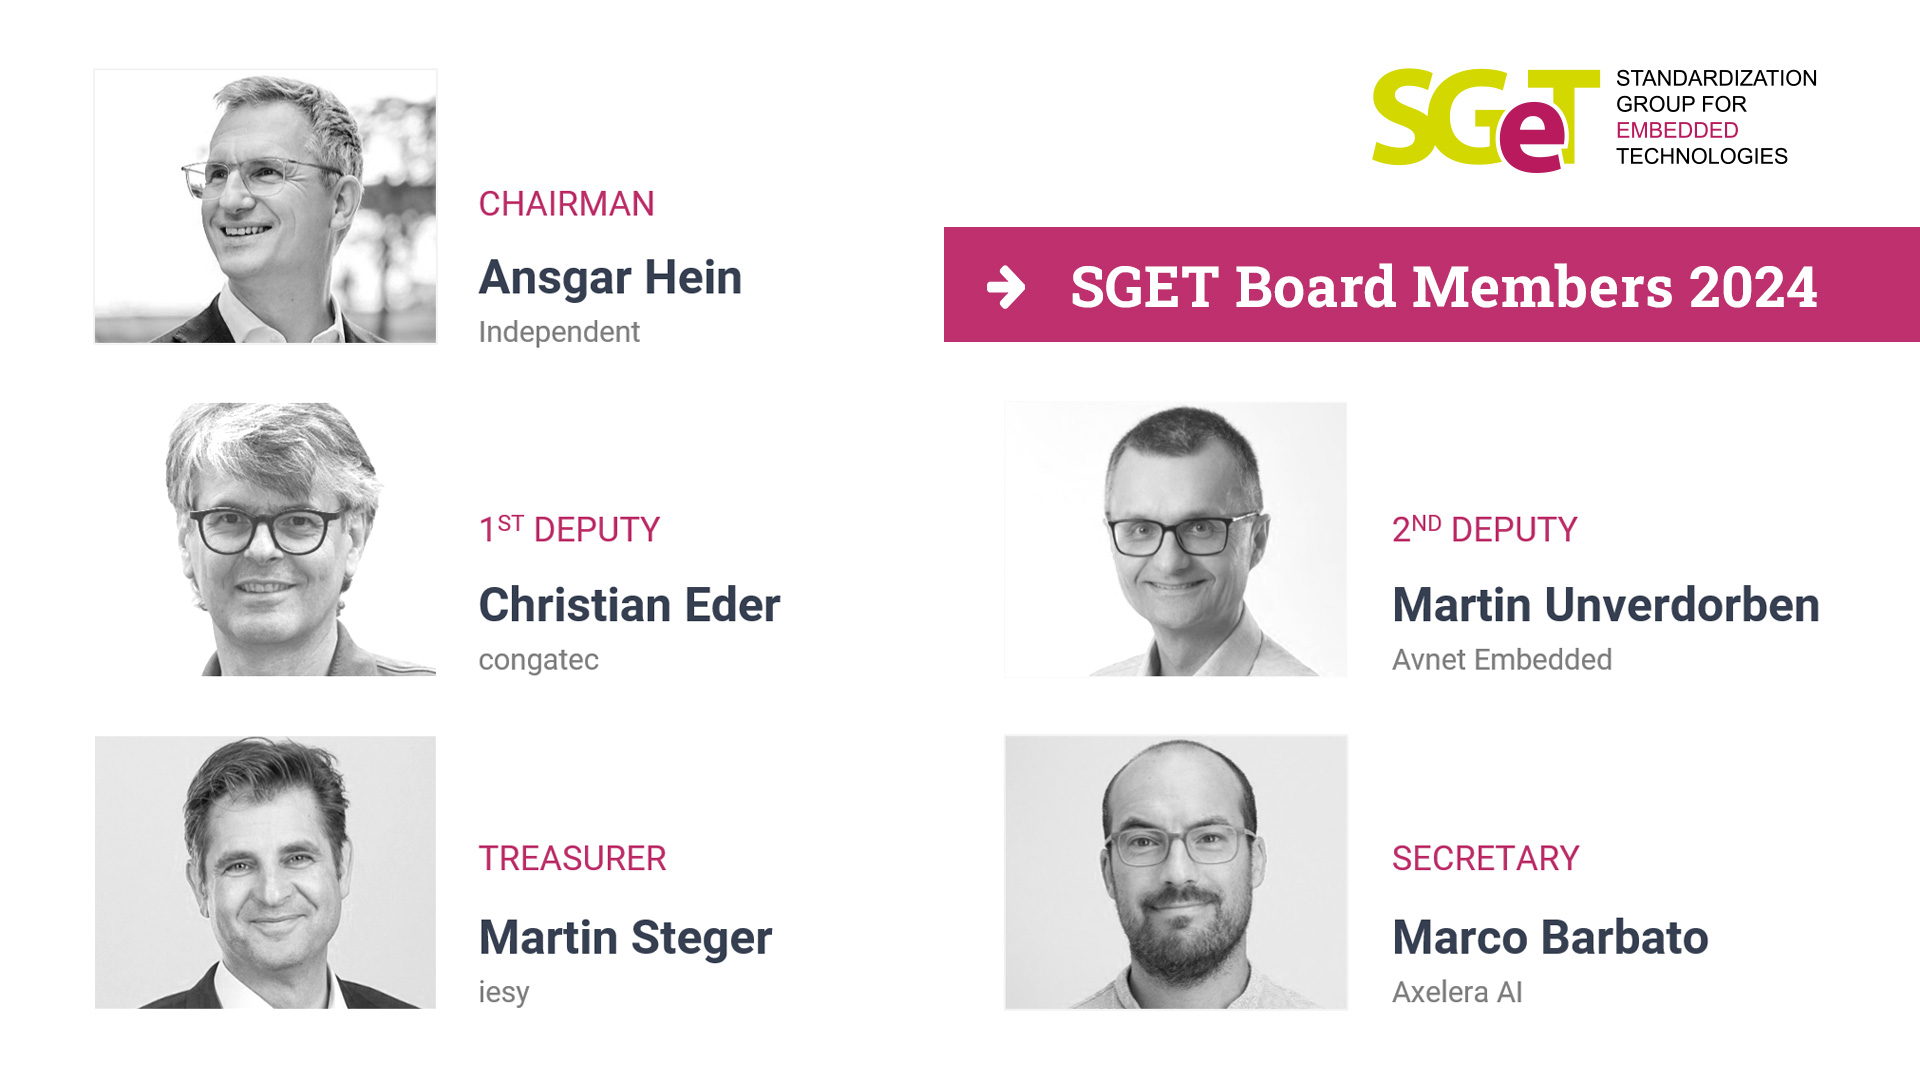 SGET Board Members 2024